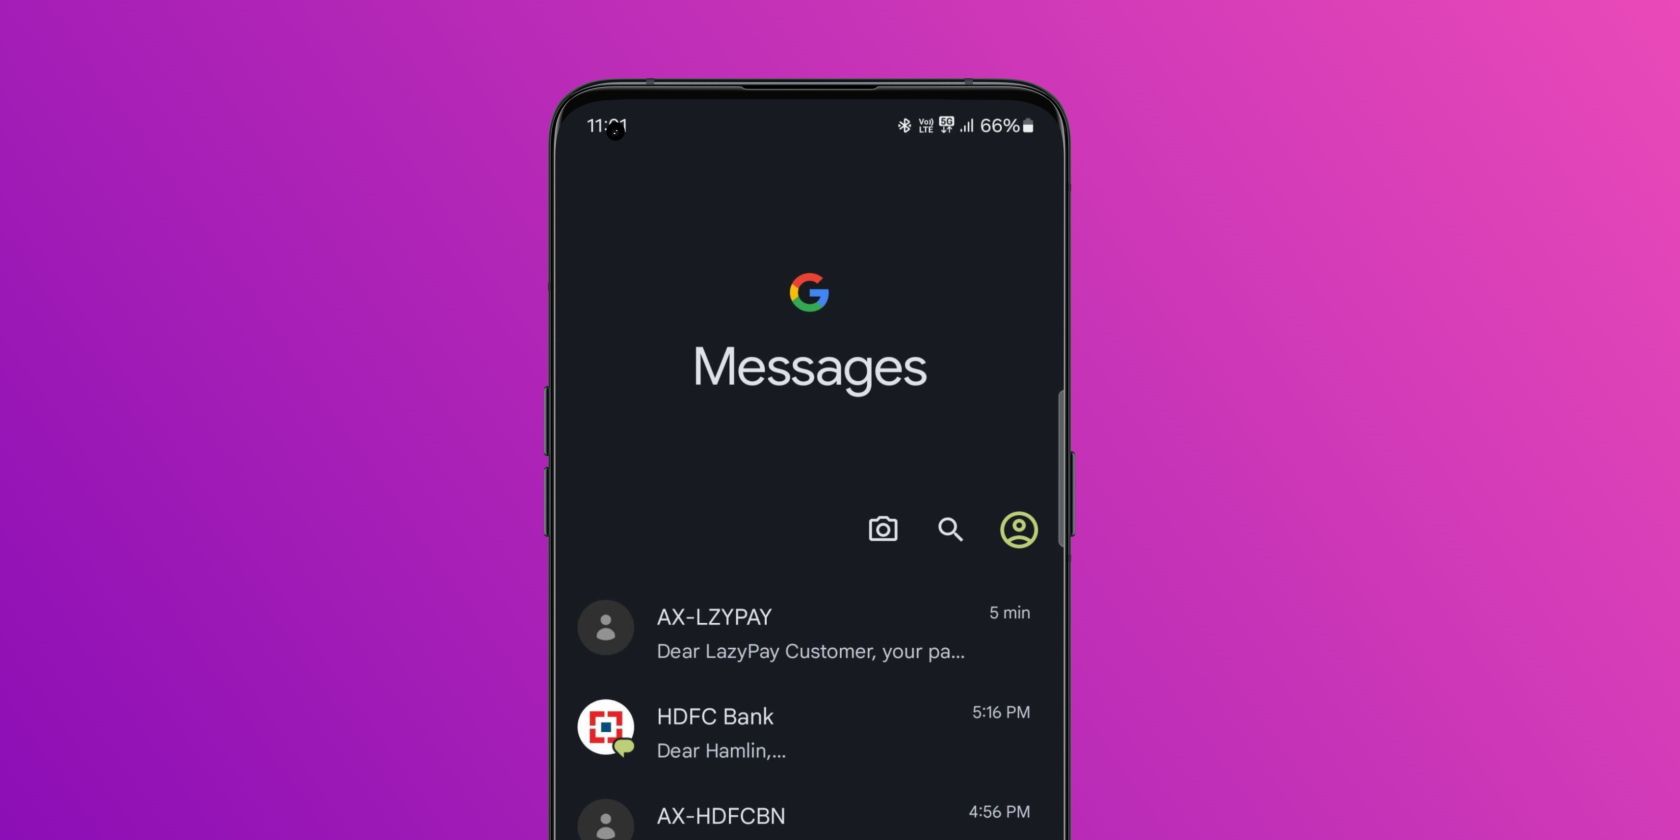 Google Messages app running on a smartphone